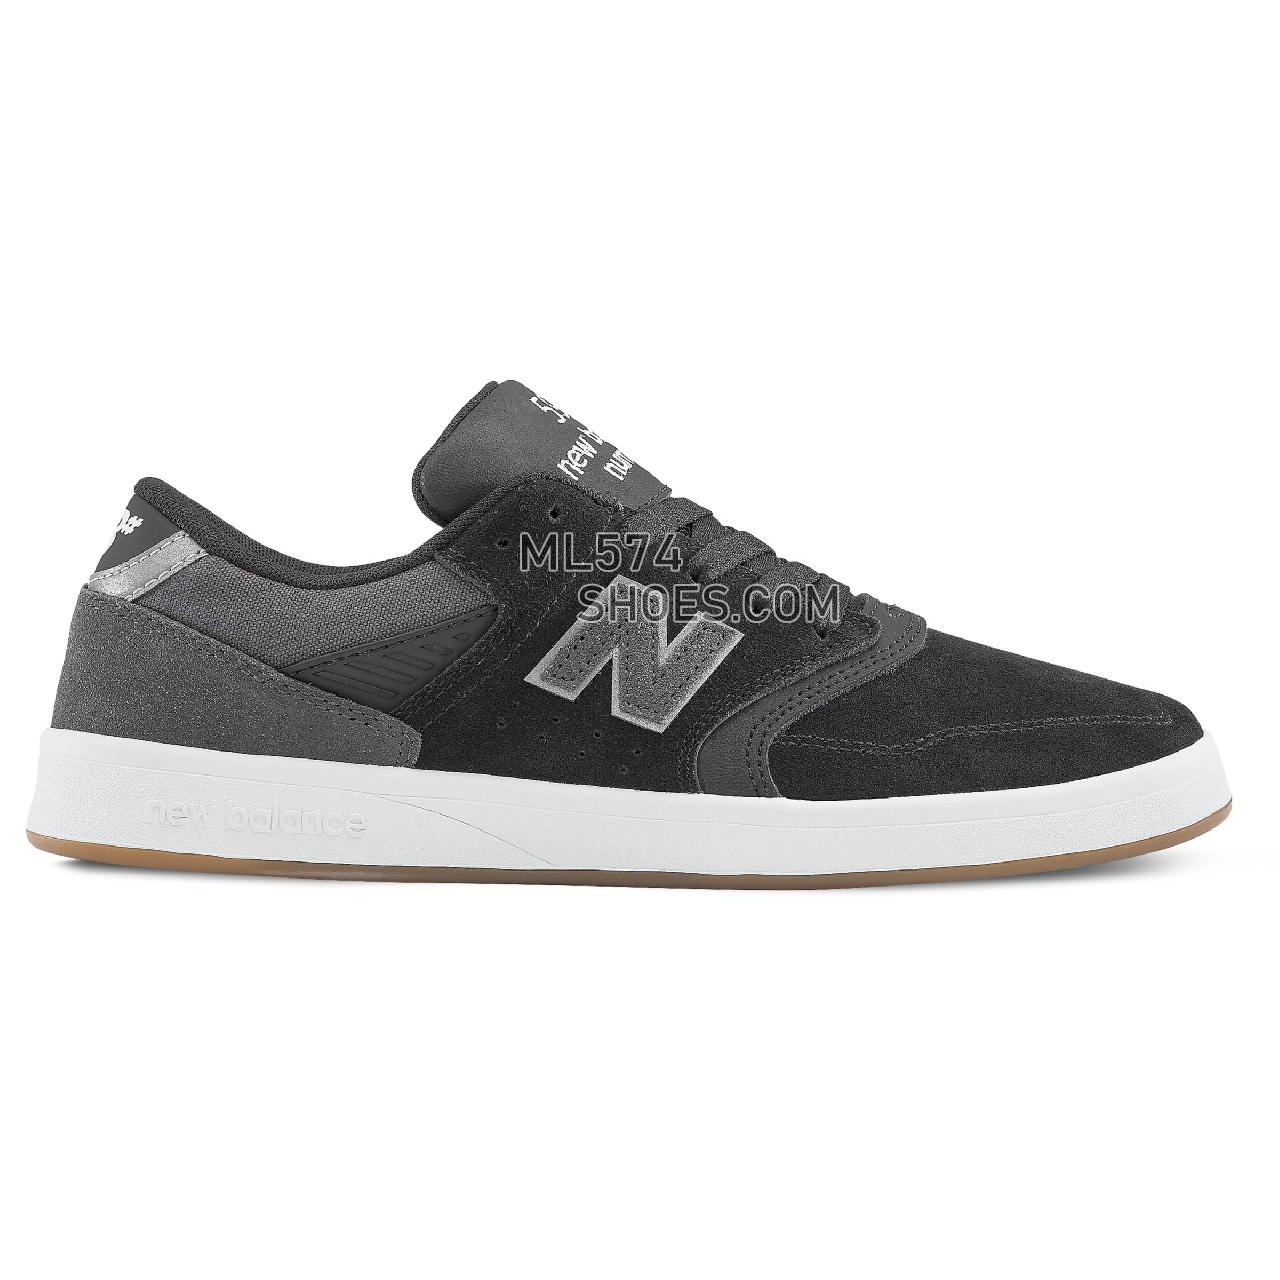 New Balance 598 - Men's 598 - Classic Black with Grey - NM598BKG